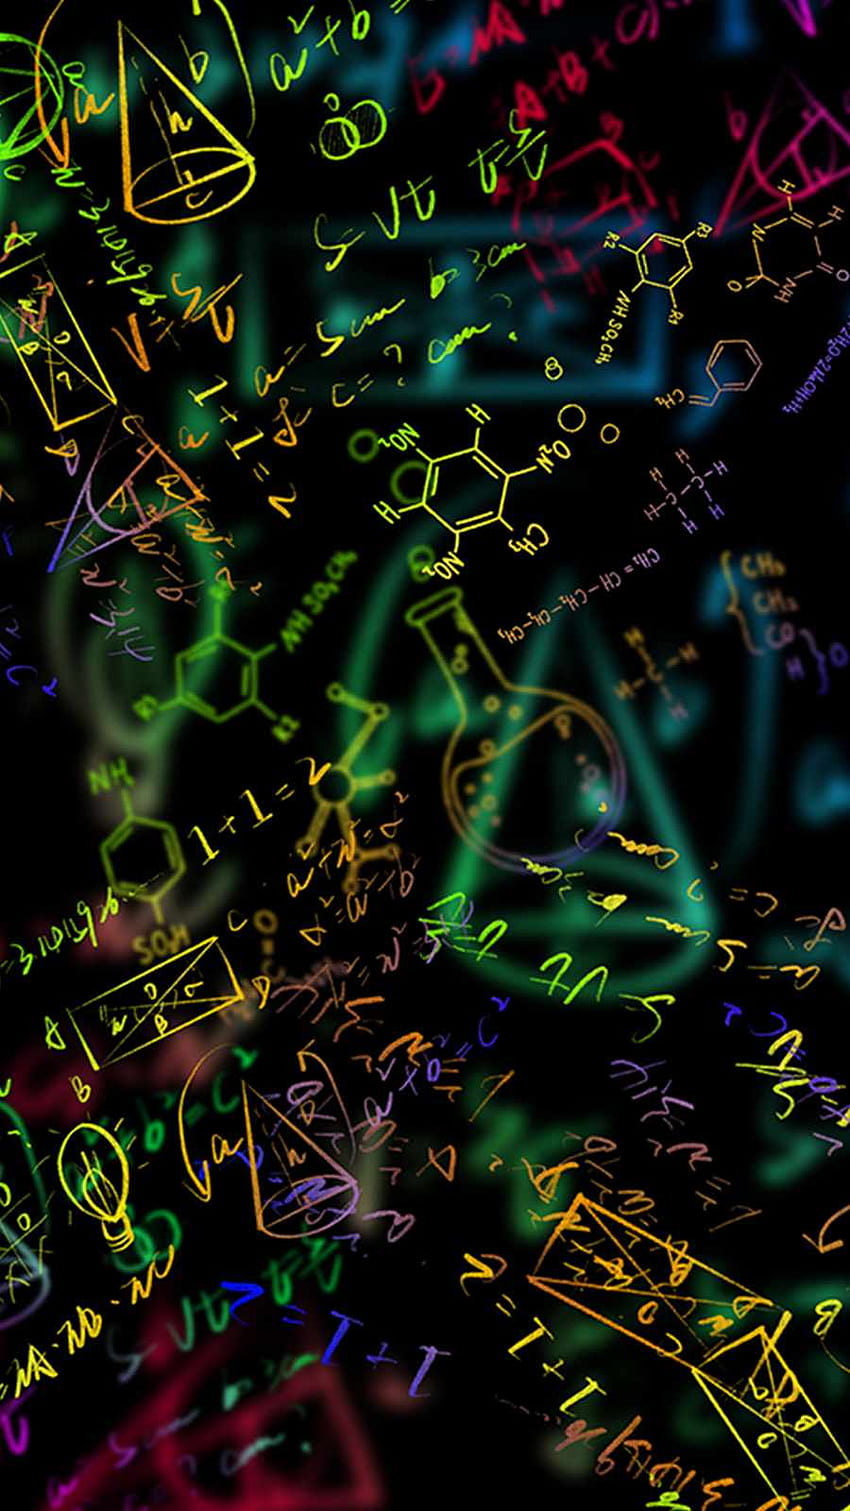 Kimia Dan Matematika IPhone - IPhone : iPhone , Matematika iPhone wallpaper ponsel HD